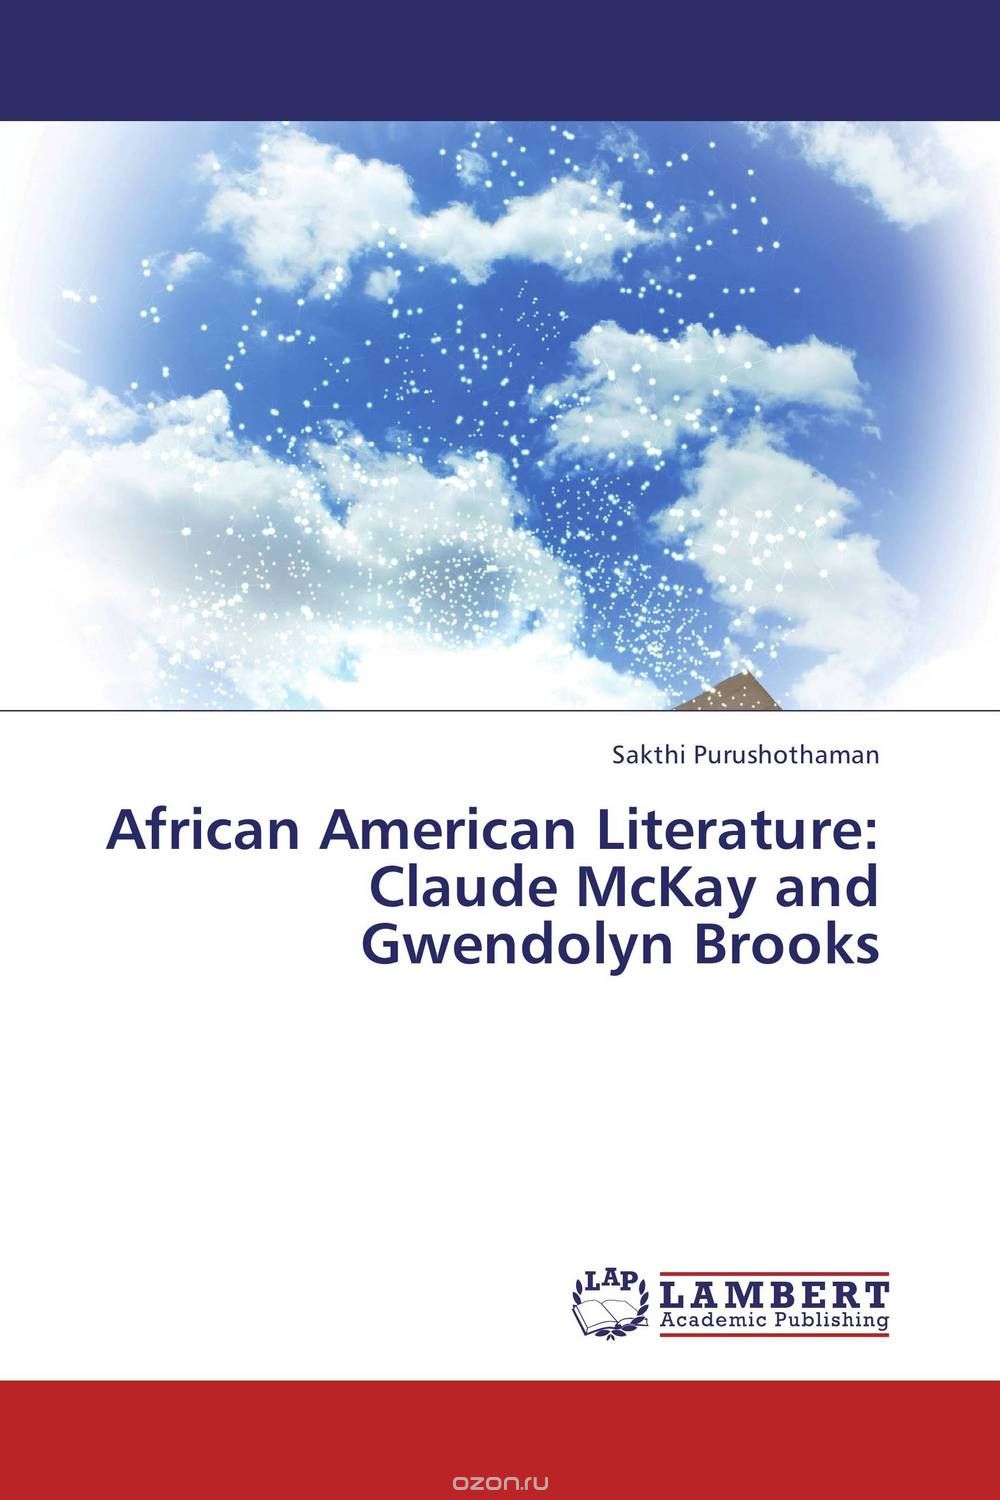 Скачать книгу "African American Literature: Claude McKay and Gwendolyn Brooks"